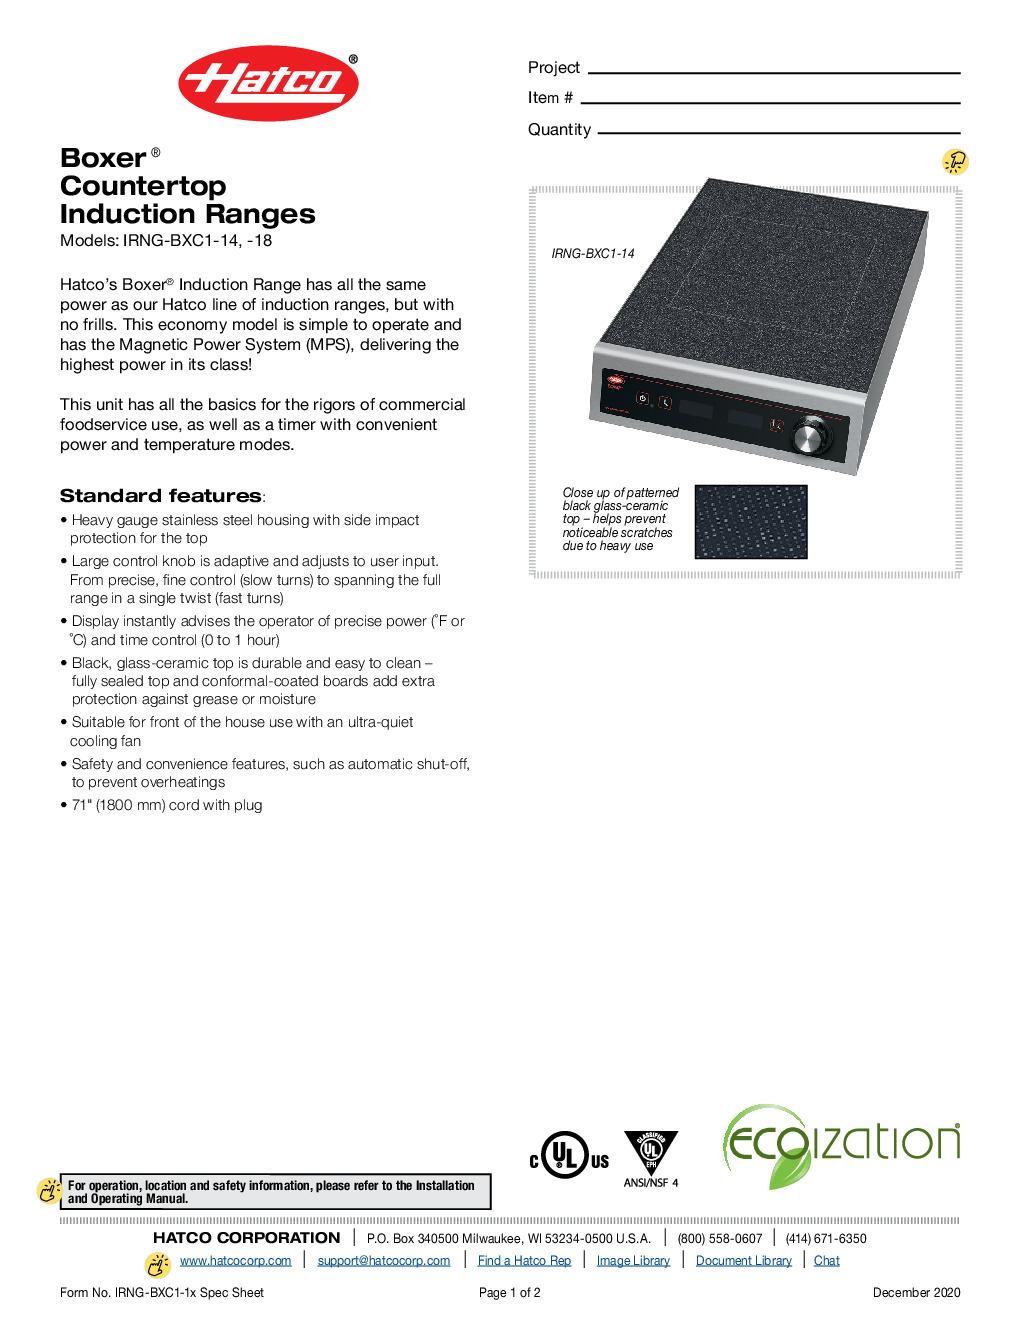 Hatco IRNG-BXC1-18-QS Countertop Induction Range Warmer